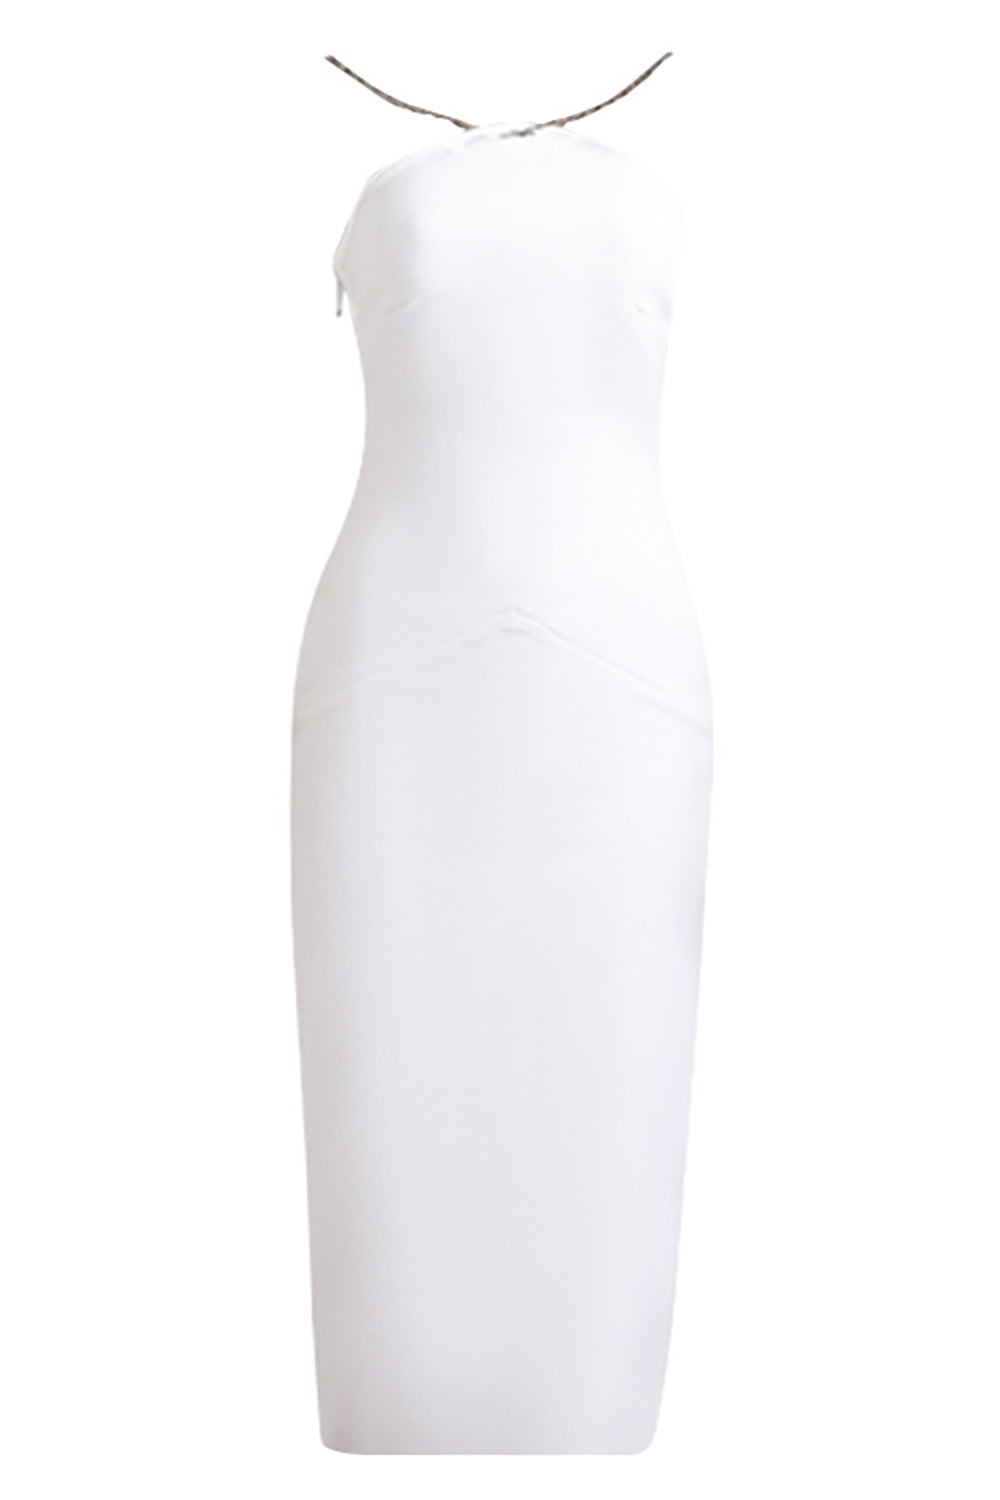 White Halter Backless Cocktail Dress With Slit